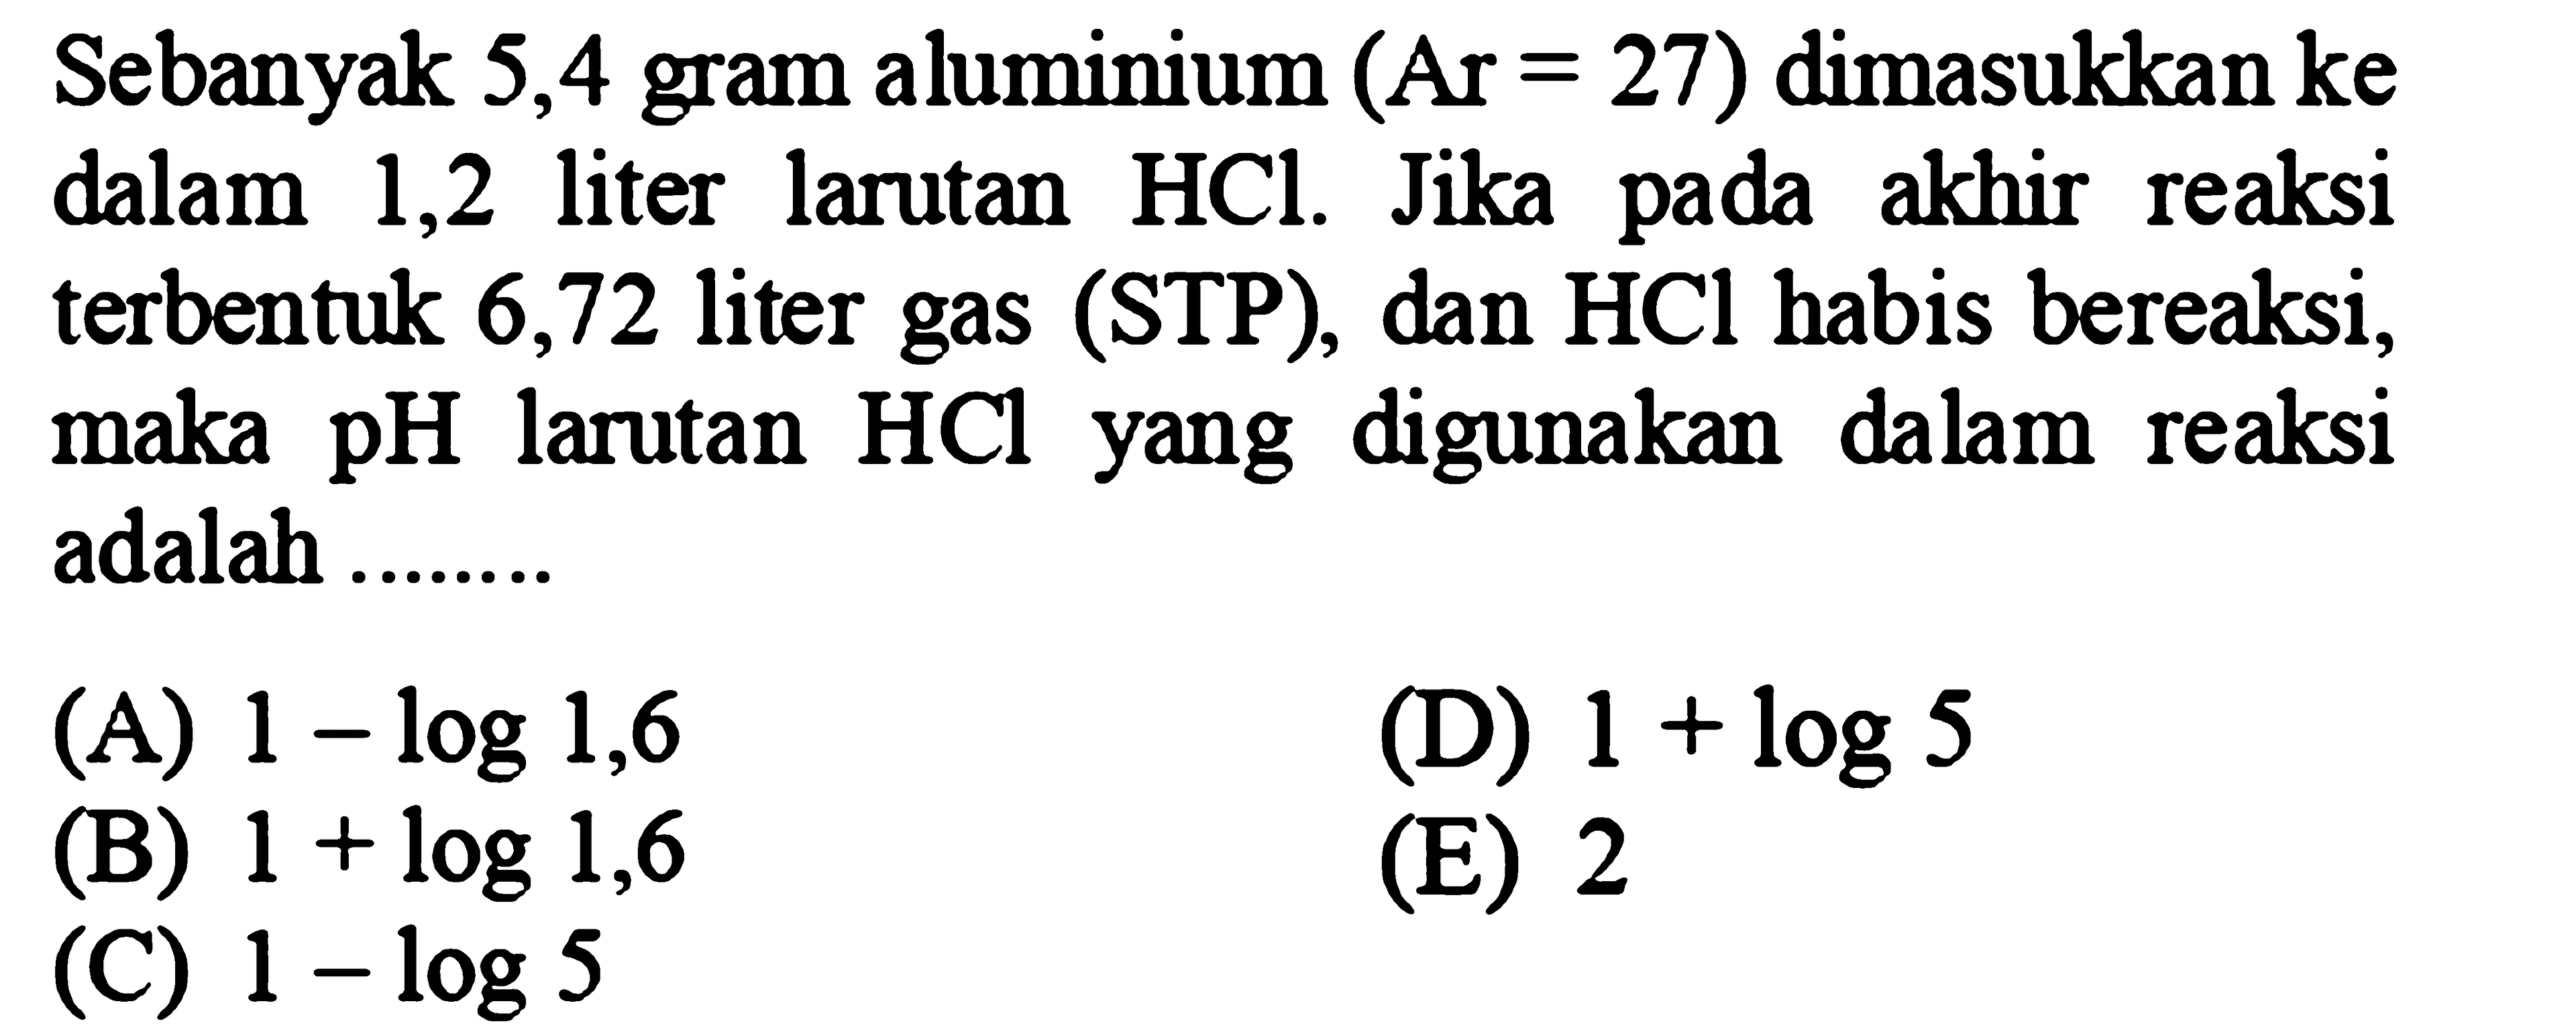 Sebanyak 5,4 gram aluminium  (Ar=27)  dimasukkan ke dalam 1,2 liter larutan  HCl . Jika pada akhir reaksi terbentuk 6,72 liter gas (STP), dan HCl habis bereaksi, maka pH larutan  HCl  yang digunakan dalam reaksi adalah ........
(A)  1-log 1,6 
(D)  1+log 5 
(B)  1+log 1,6 
(E) 2
(C)  1-log 5 